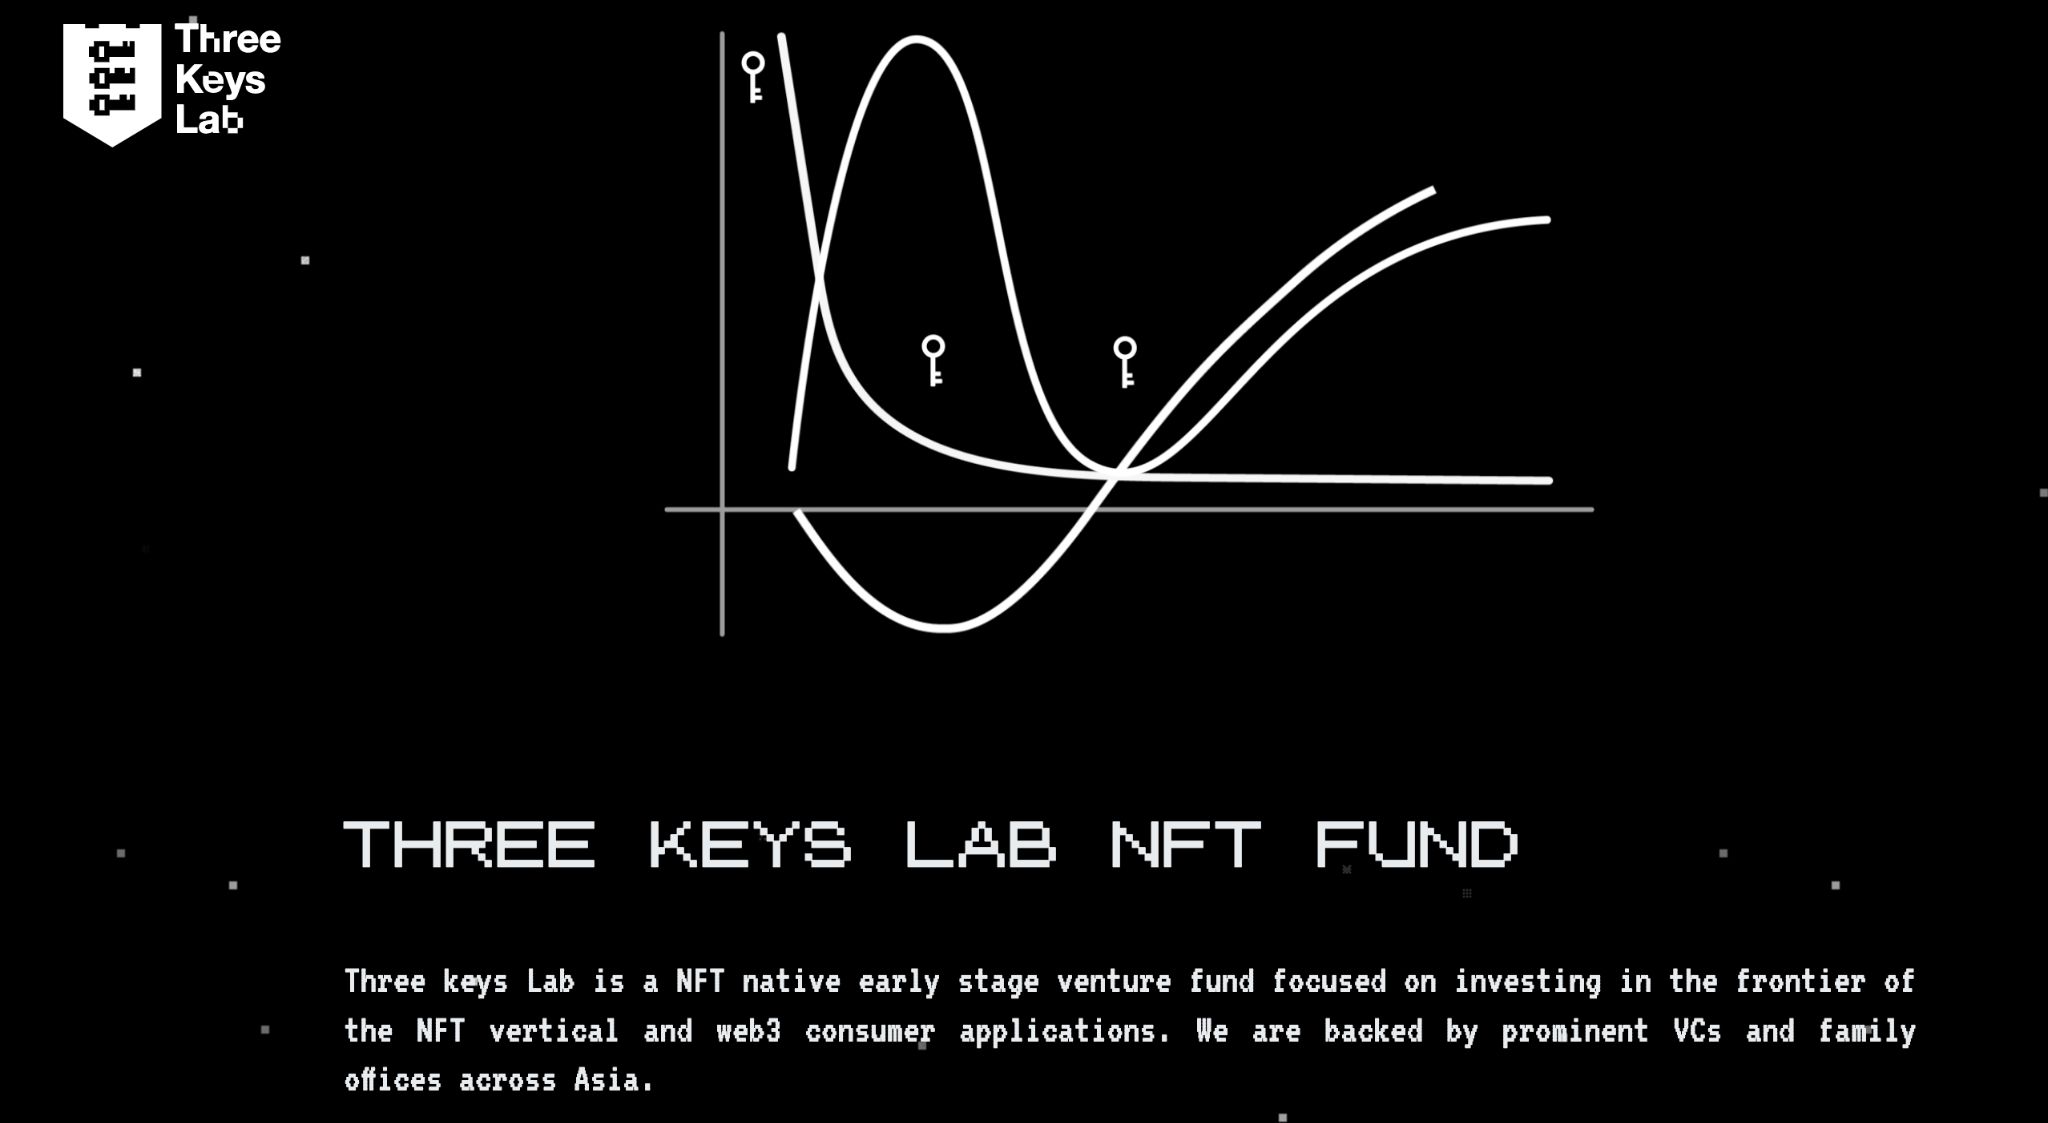 Three keys lab